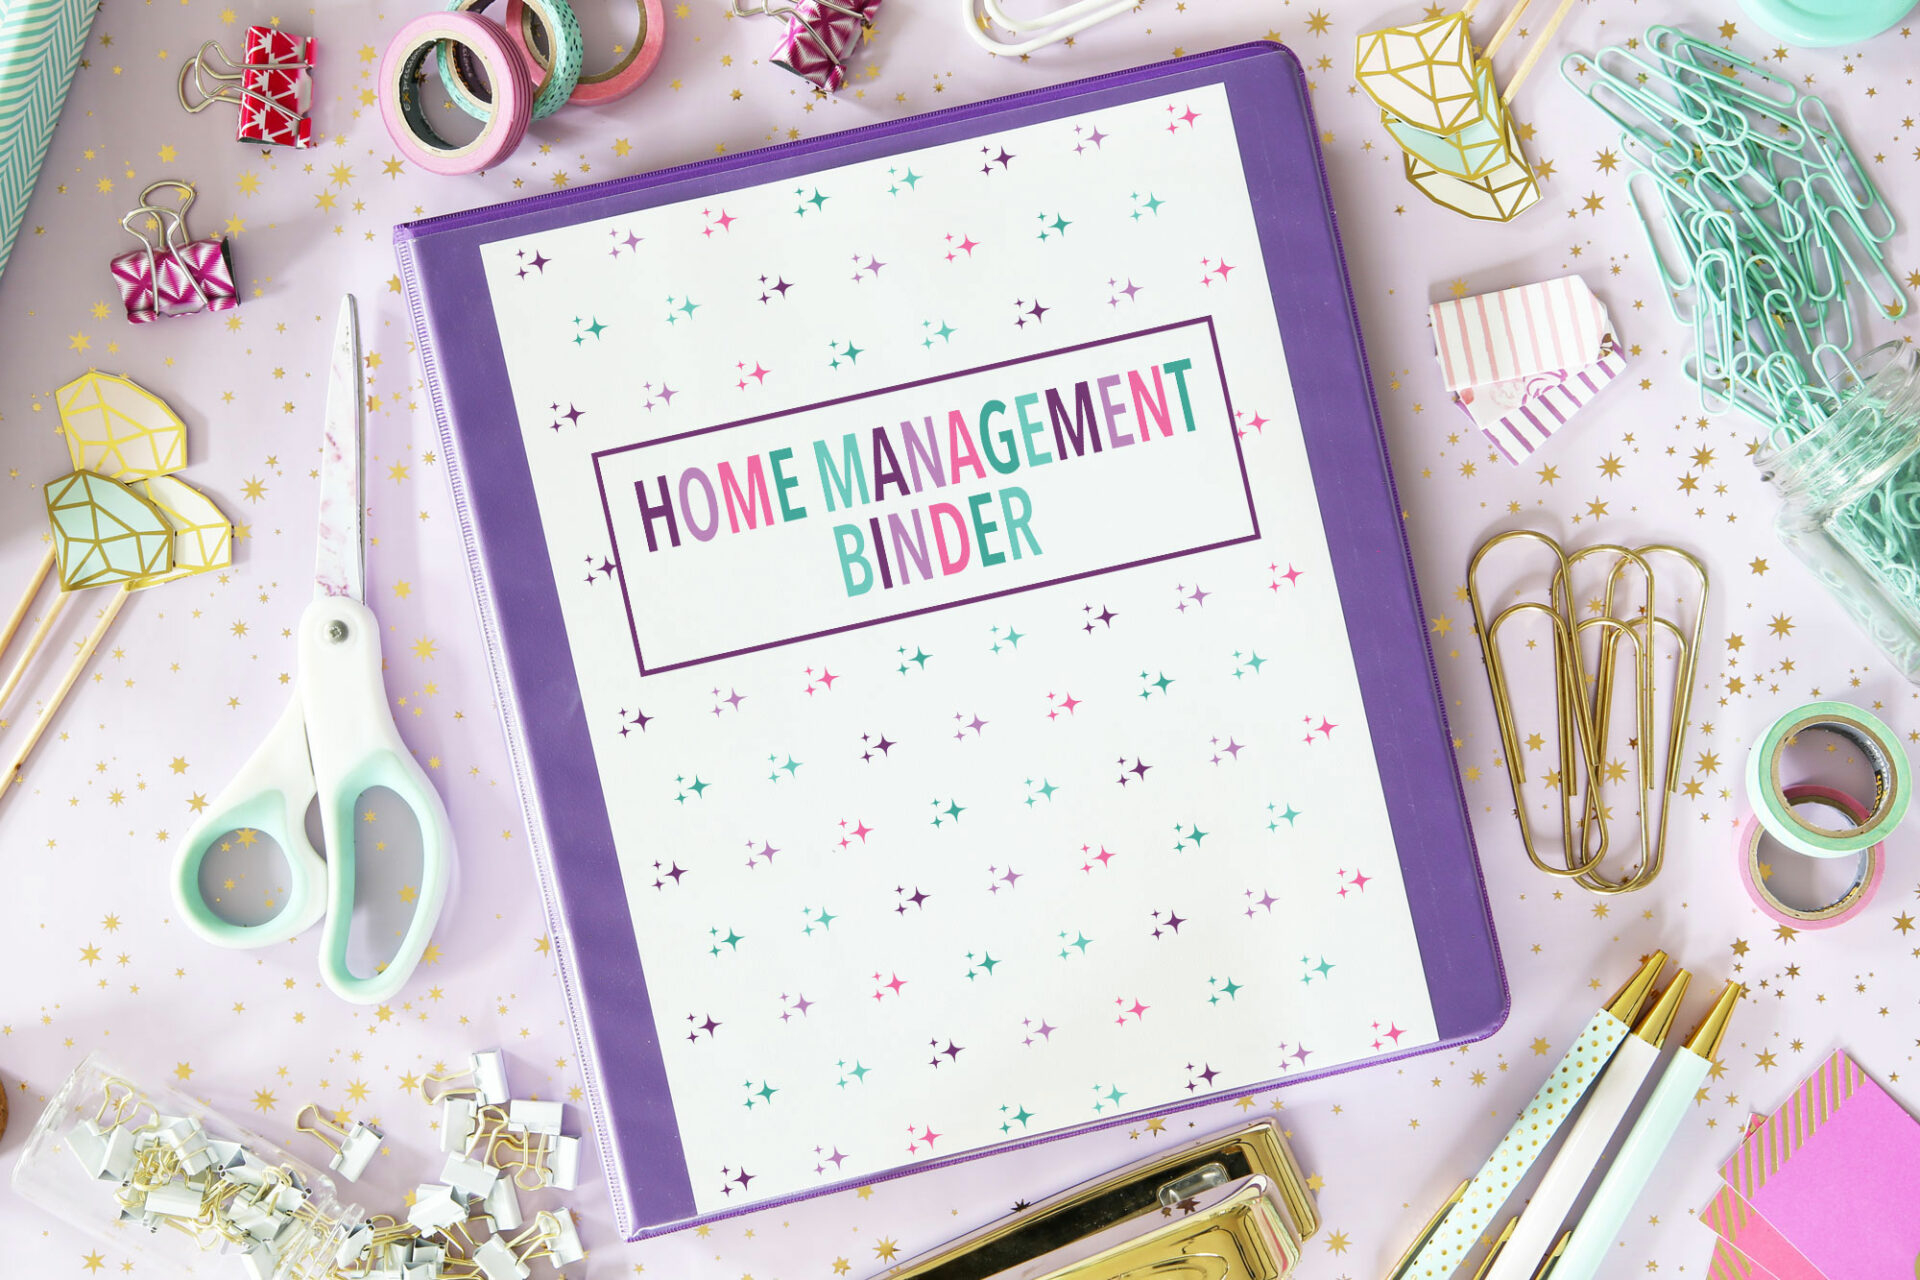 Free Printable Home Management Binder To Organize Your Life regarding Free Home Organization Binder Printables